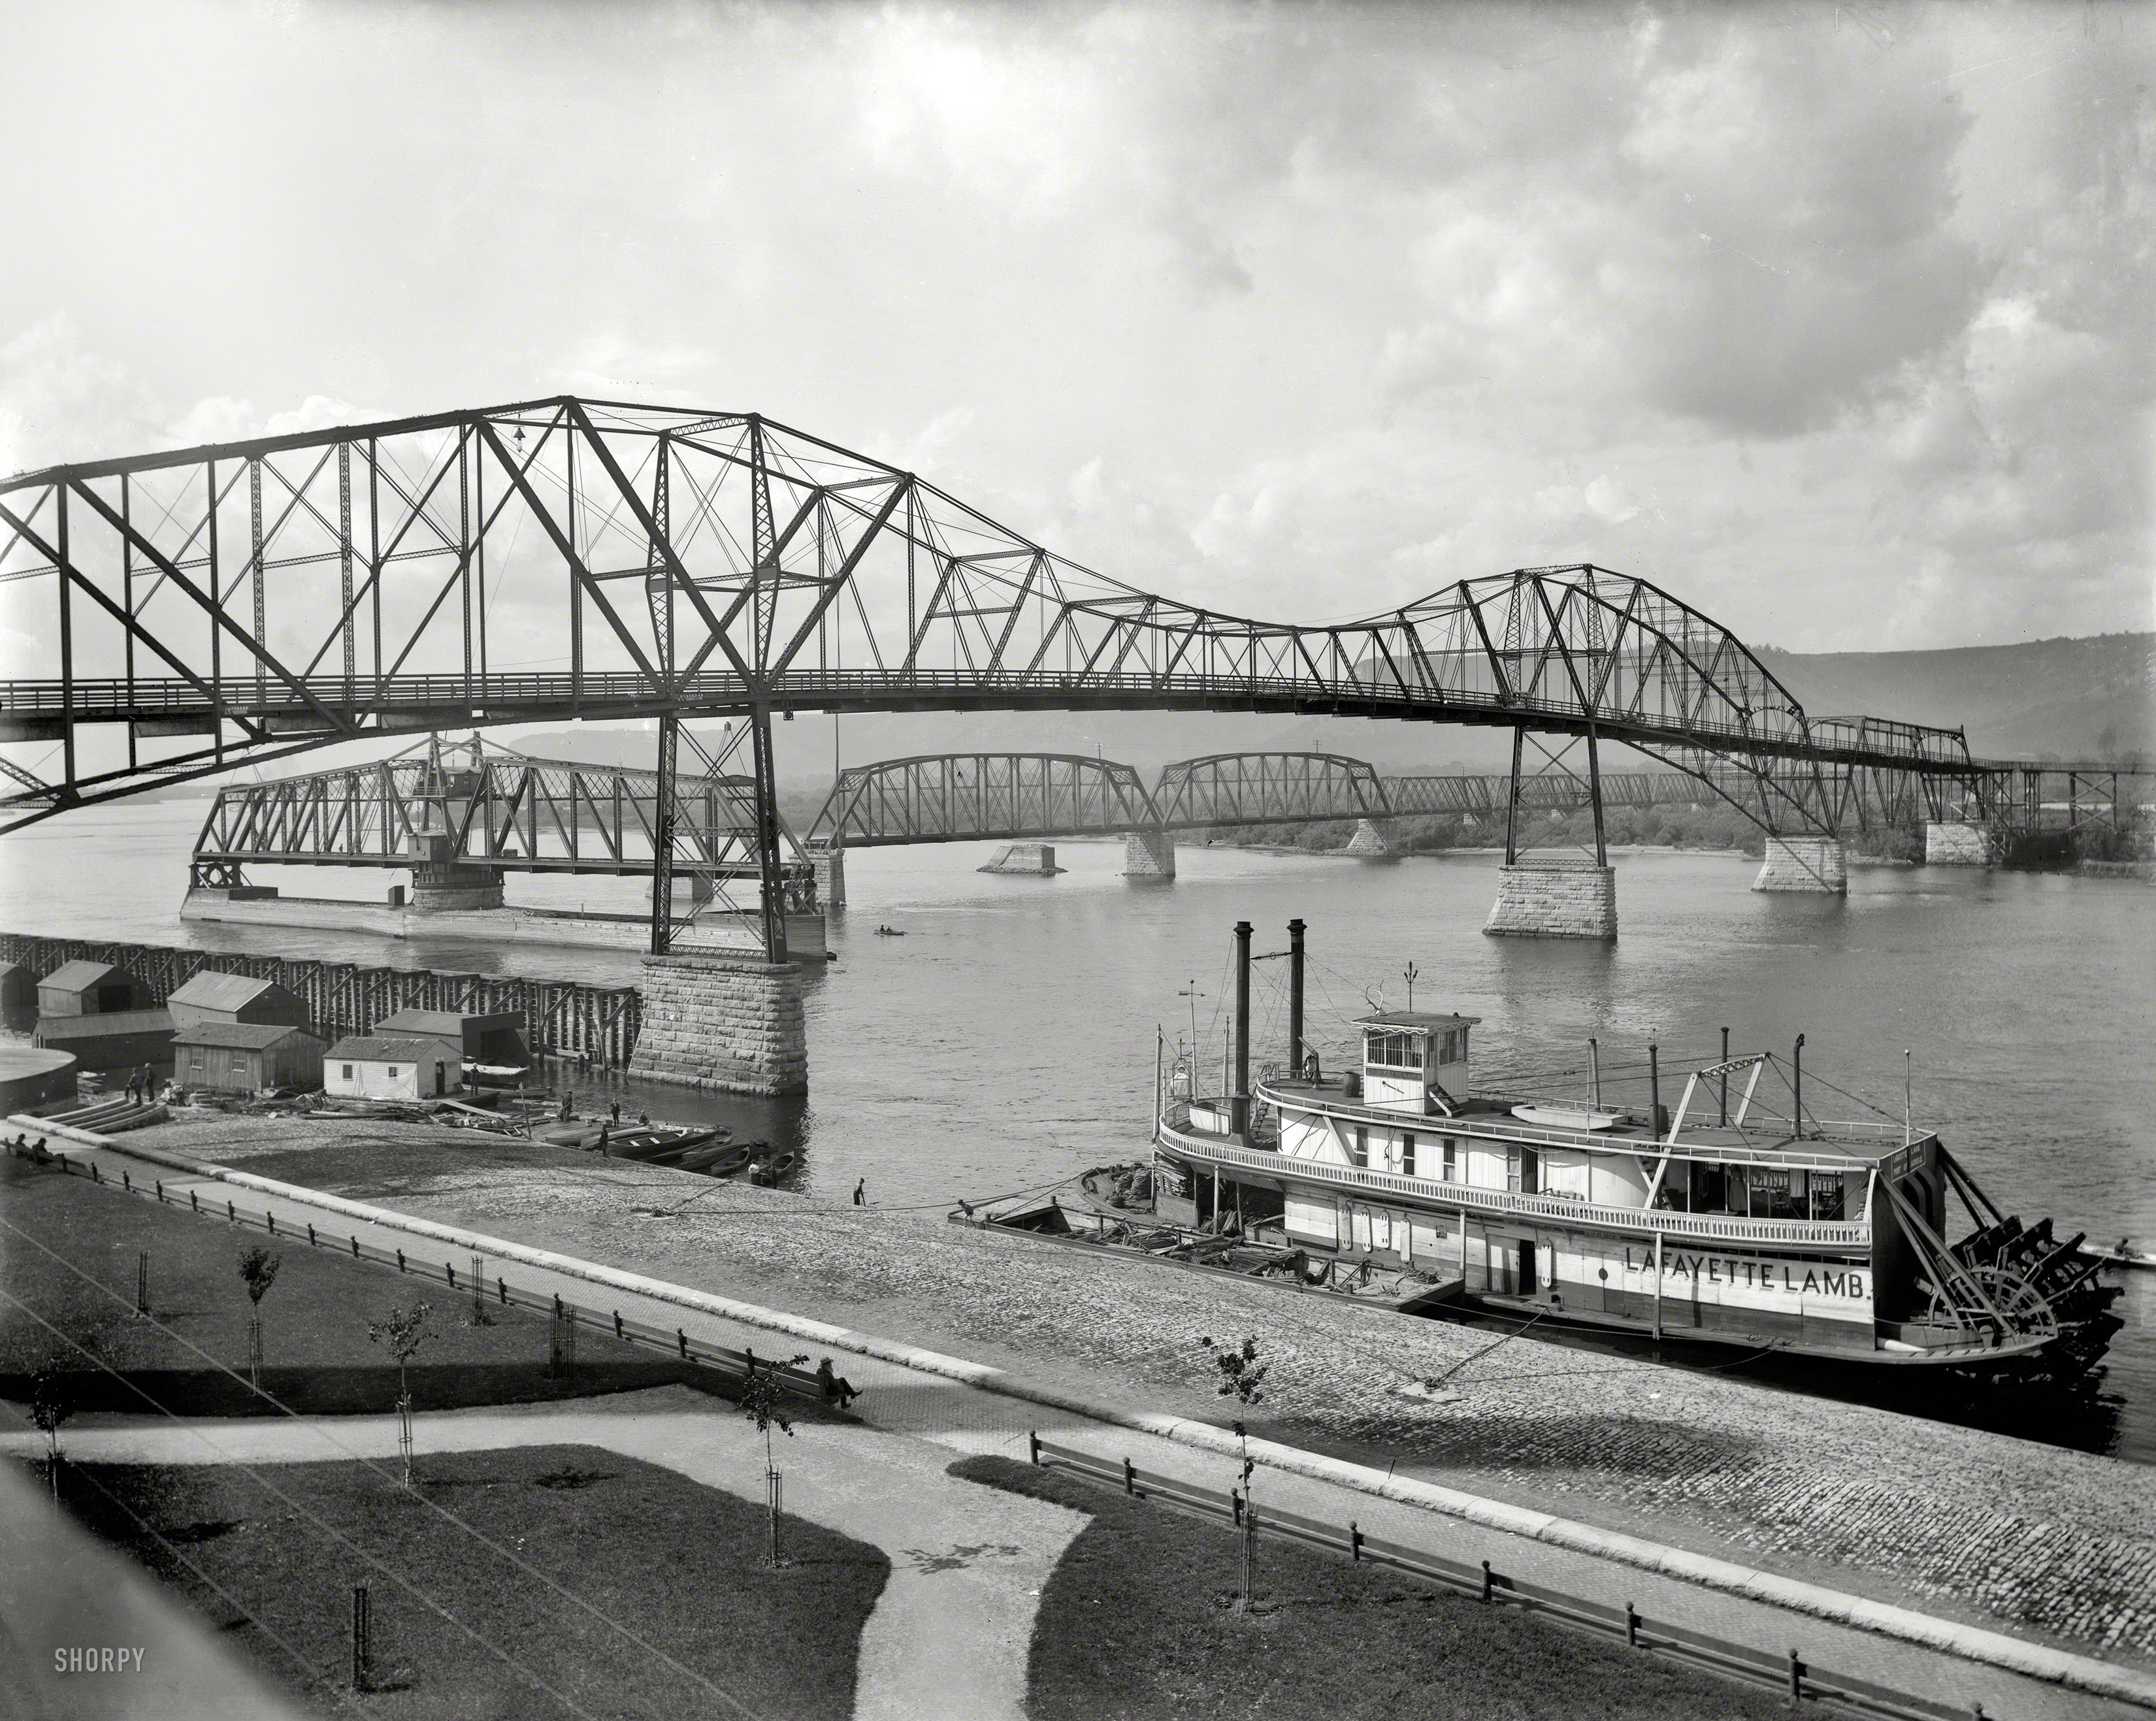 1898. Winona, Minnesota. "Bridges over the Mississippi. Sternwheeler Lafayette Lamb." 8x10 inch glass negative, Detroit Publishing Company. View full size.